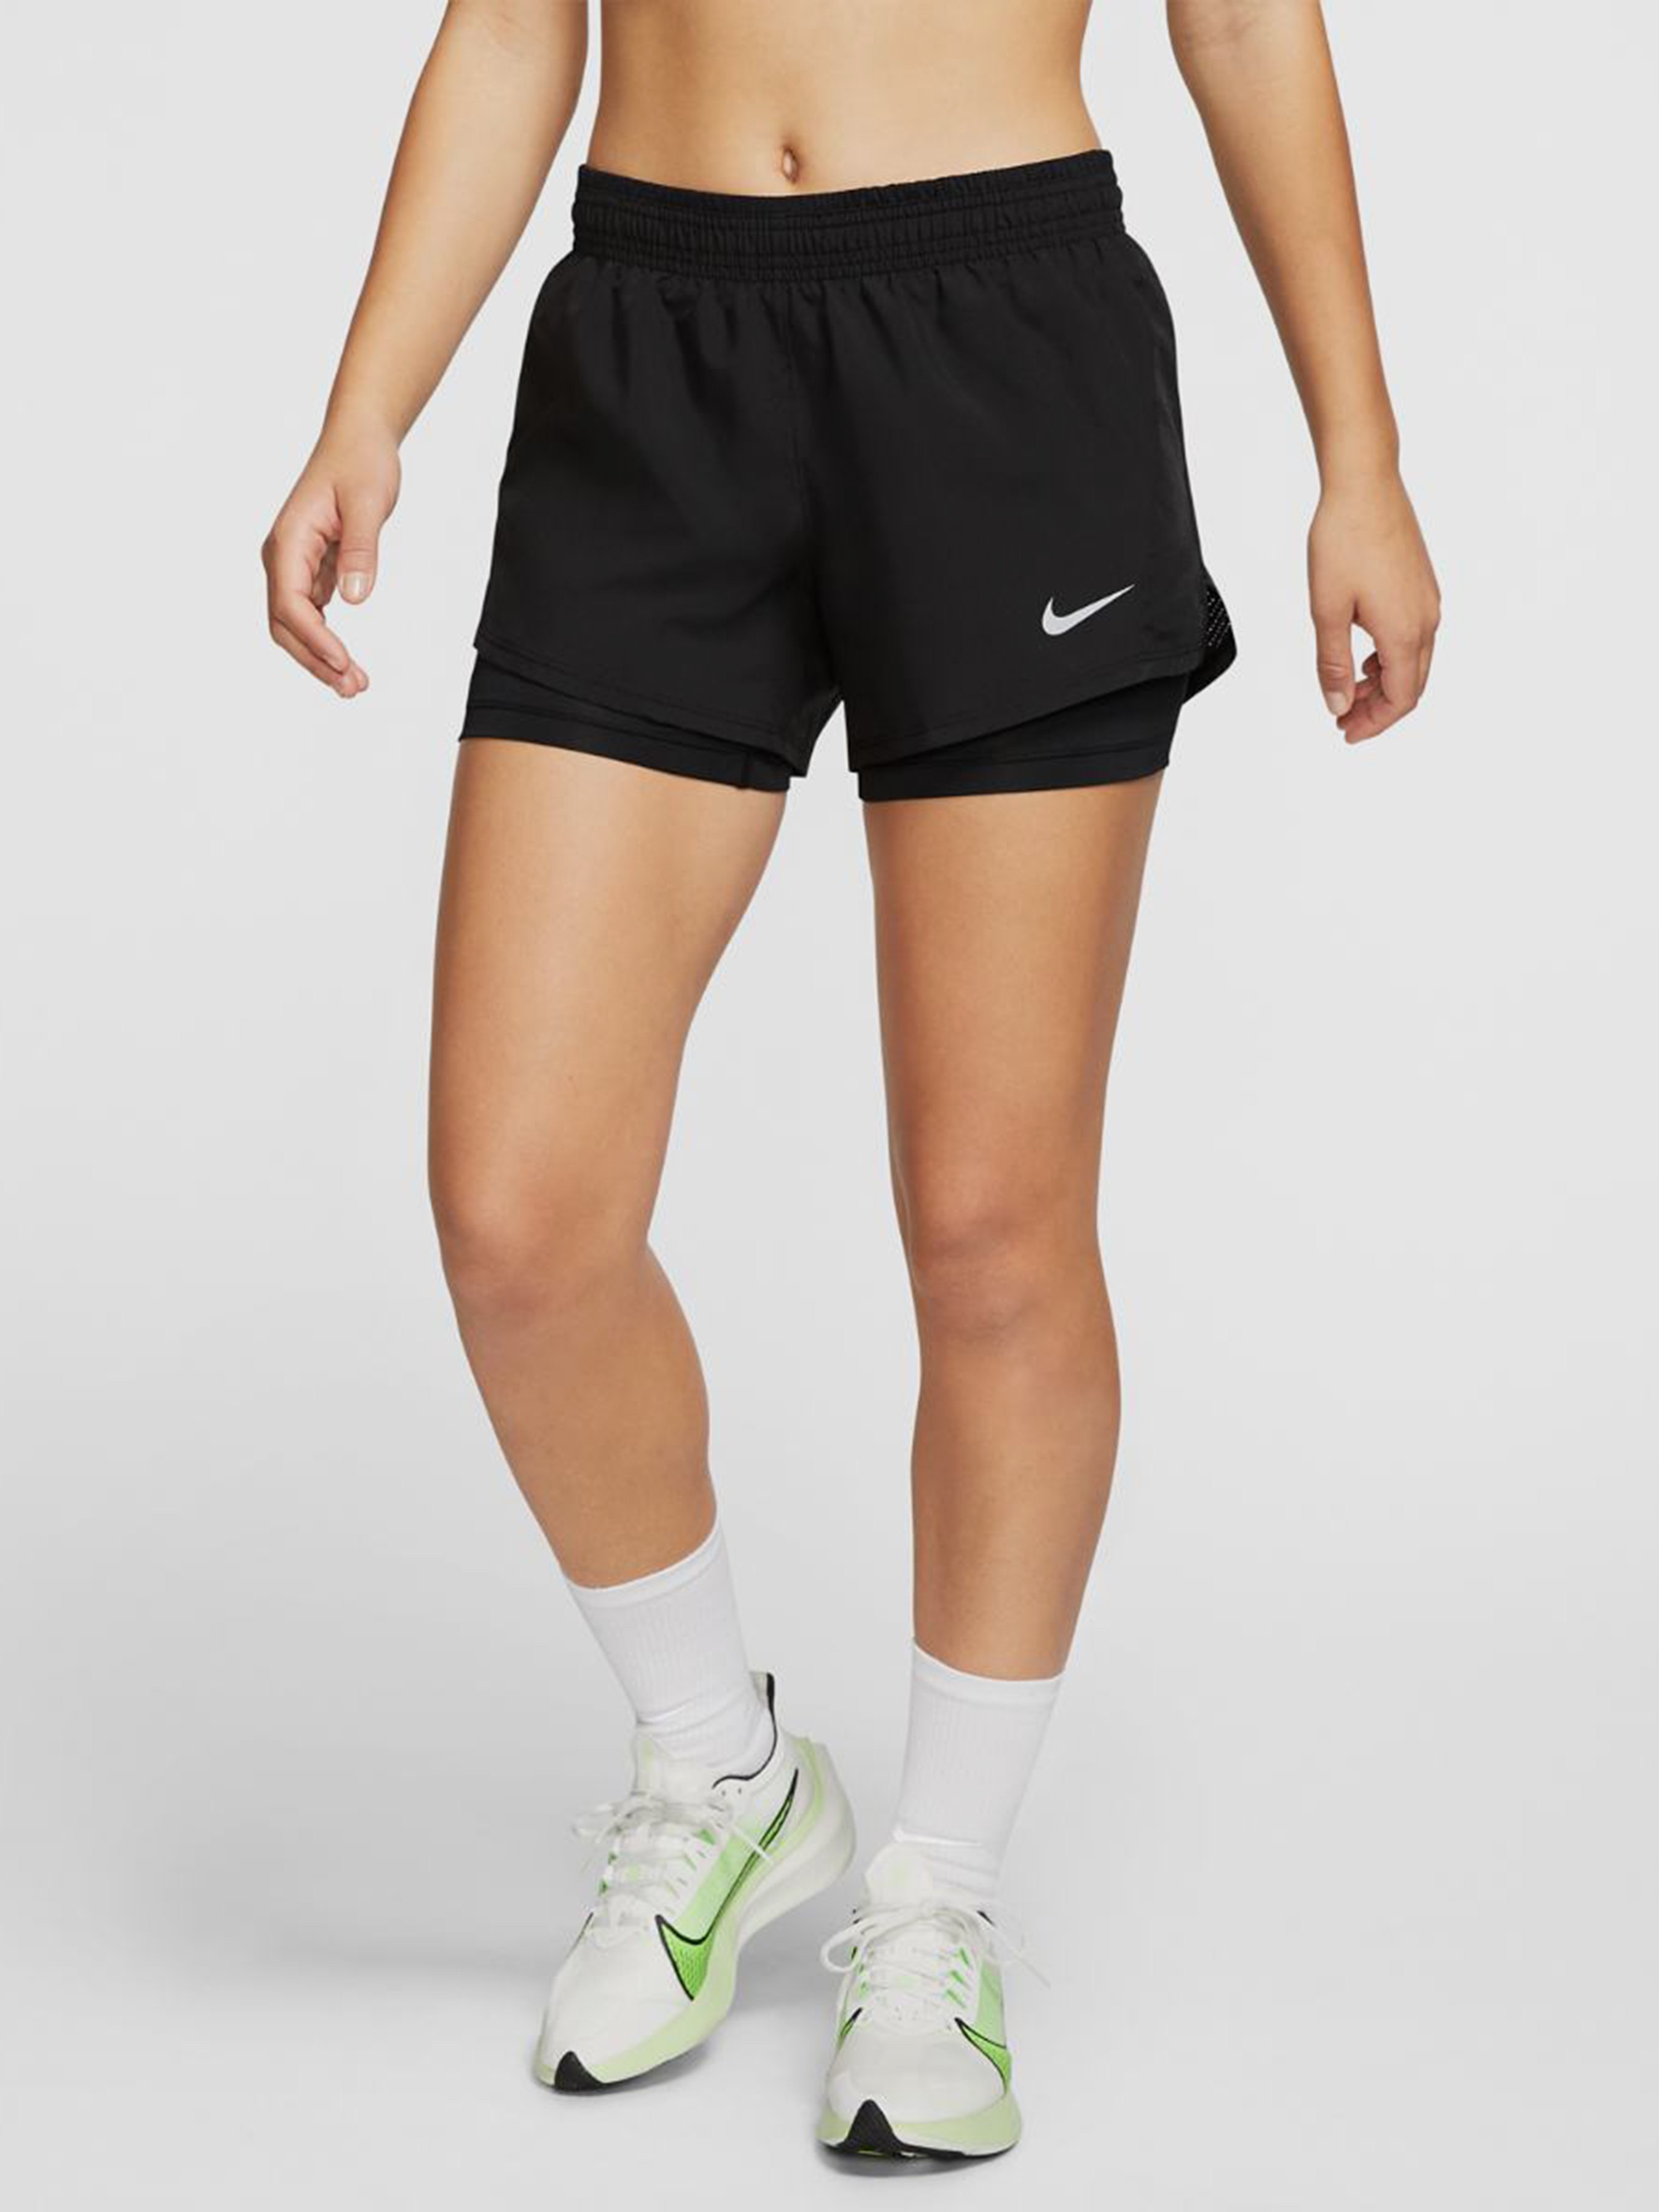 Шорты найк про. Шорты найк 10к женские. Шорты найк ck1004-10. Nike tempo Luxe Run Division shorts. Шорты Nike Dri Fit женские.